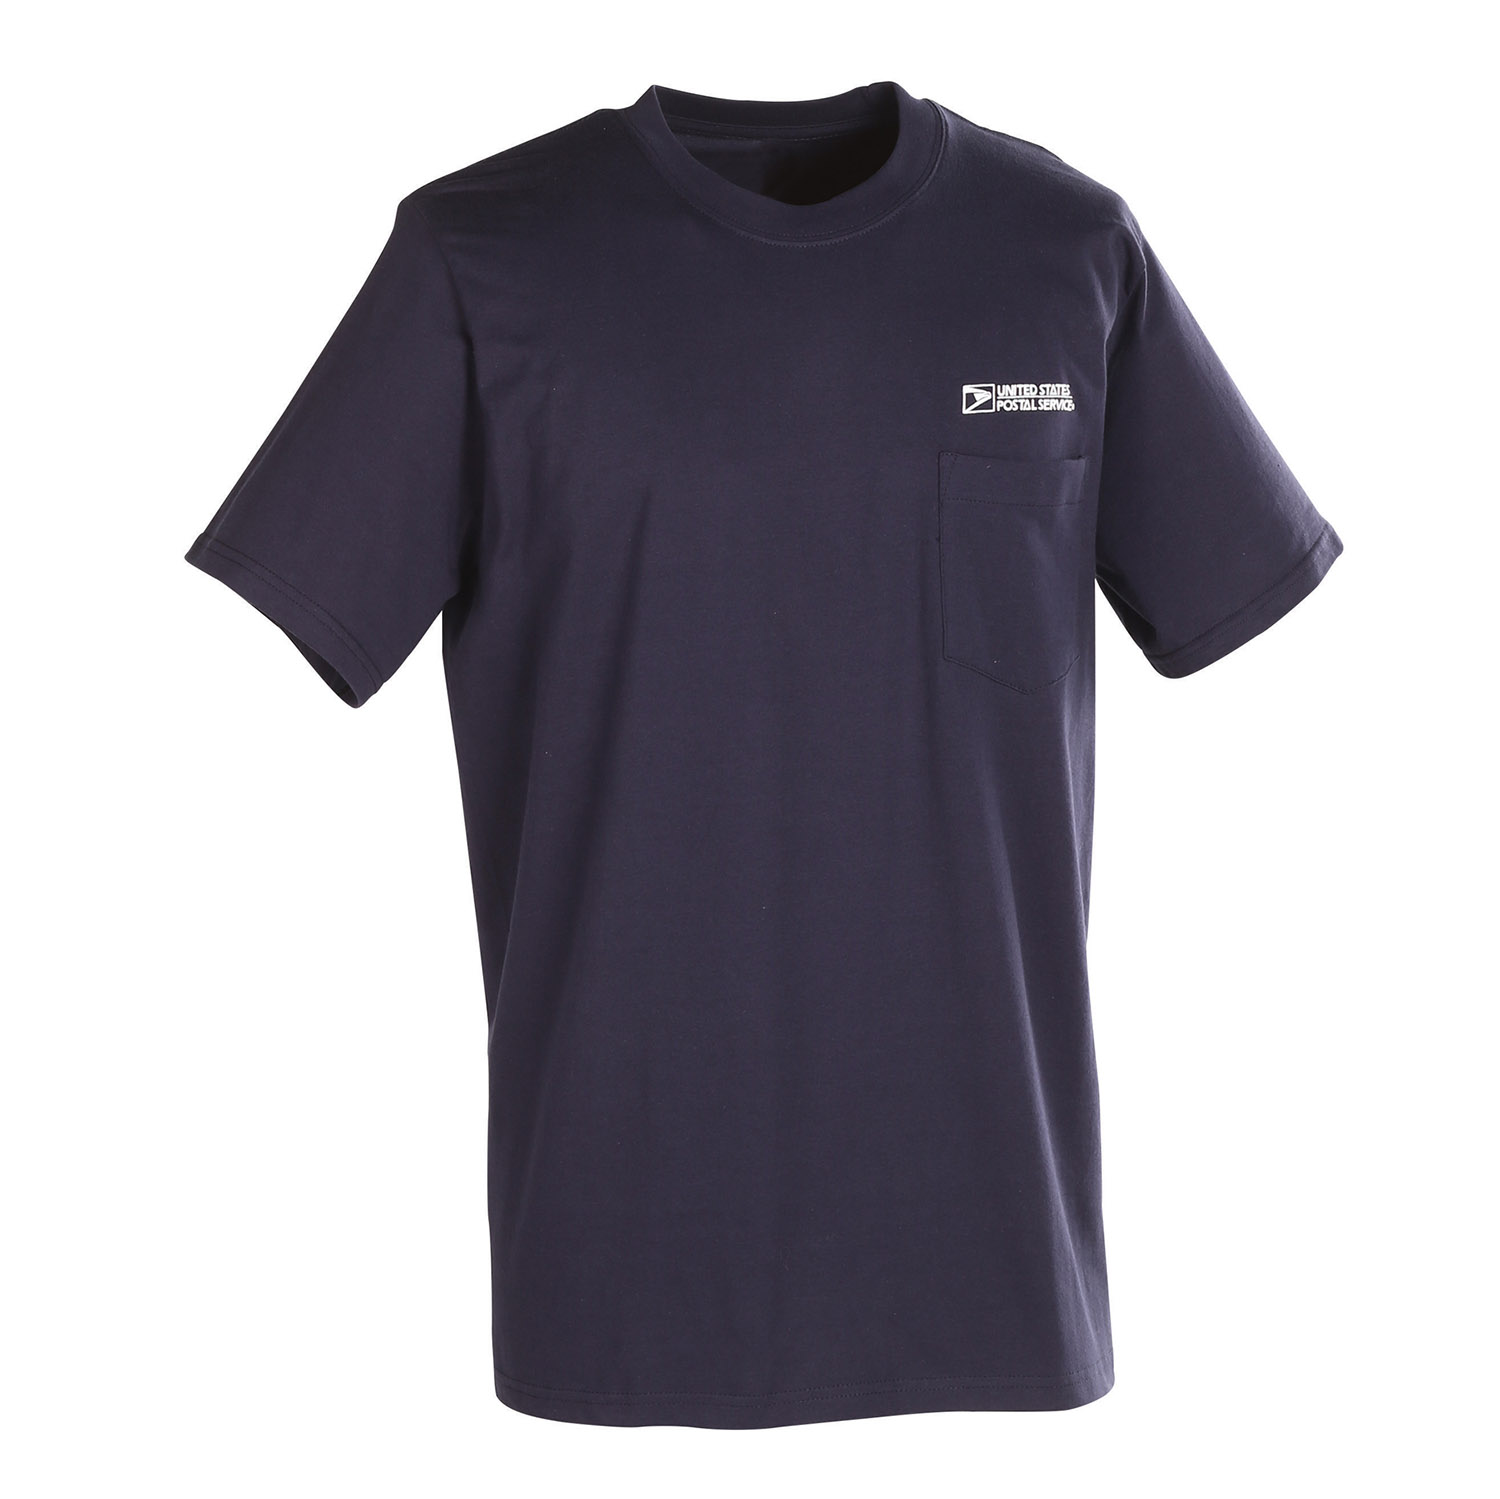 Mailhandler/Maintenance Postal T-Shirt, Postal Uniform Shirt